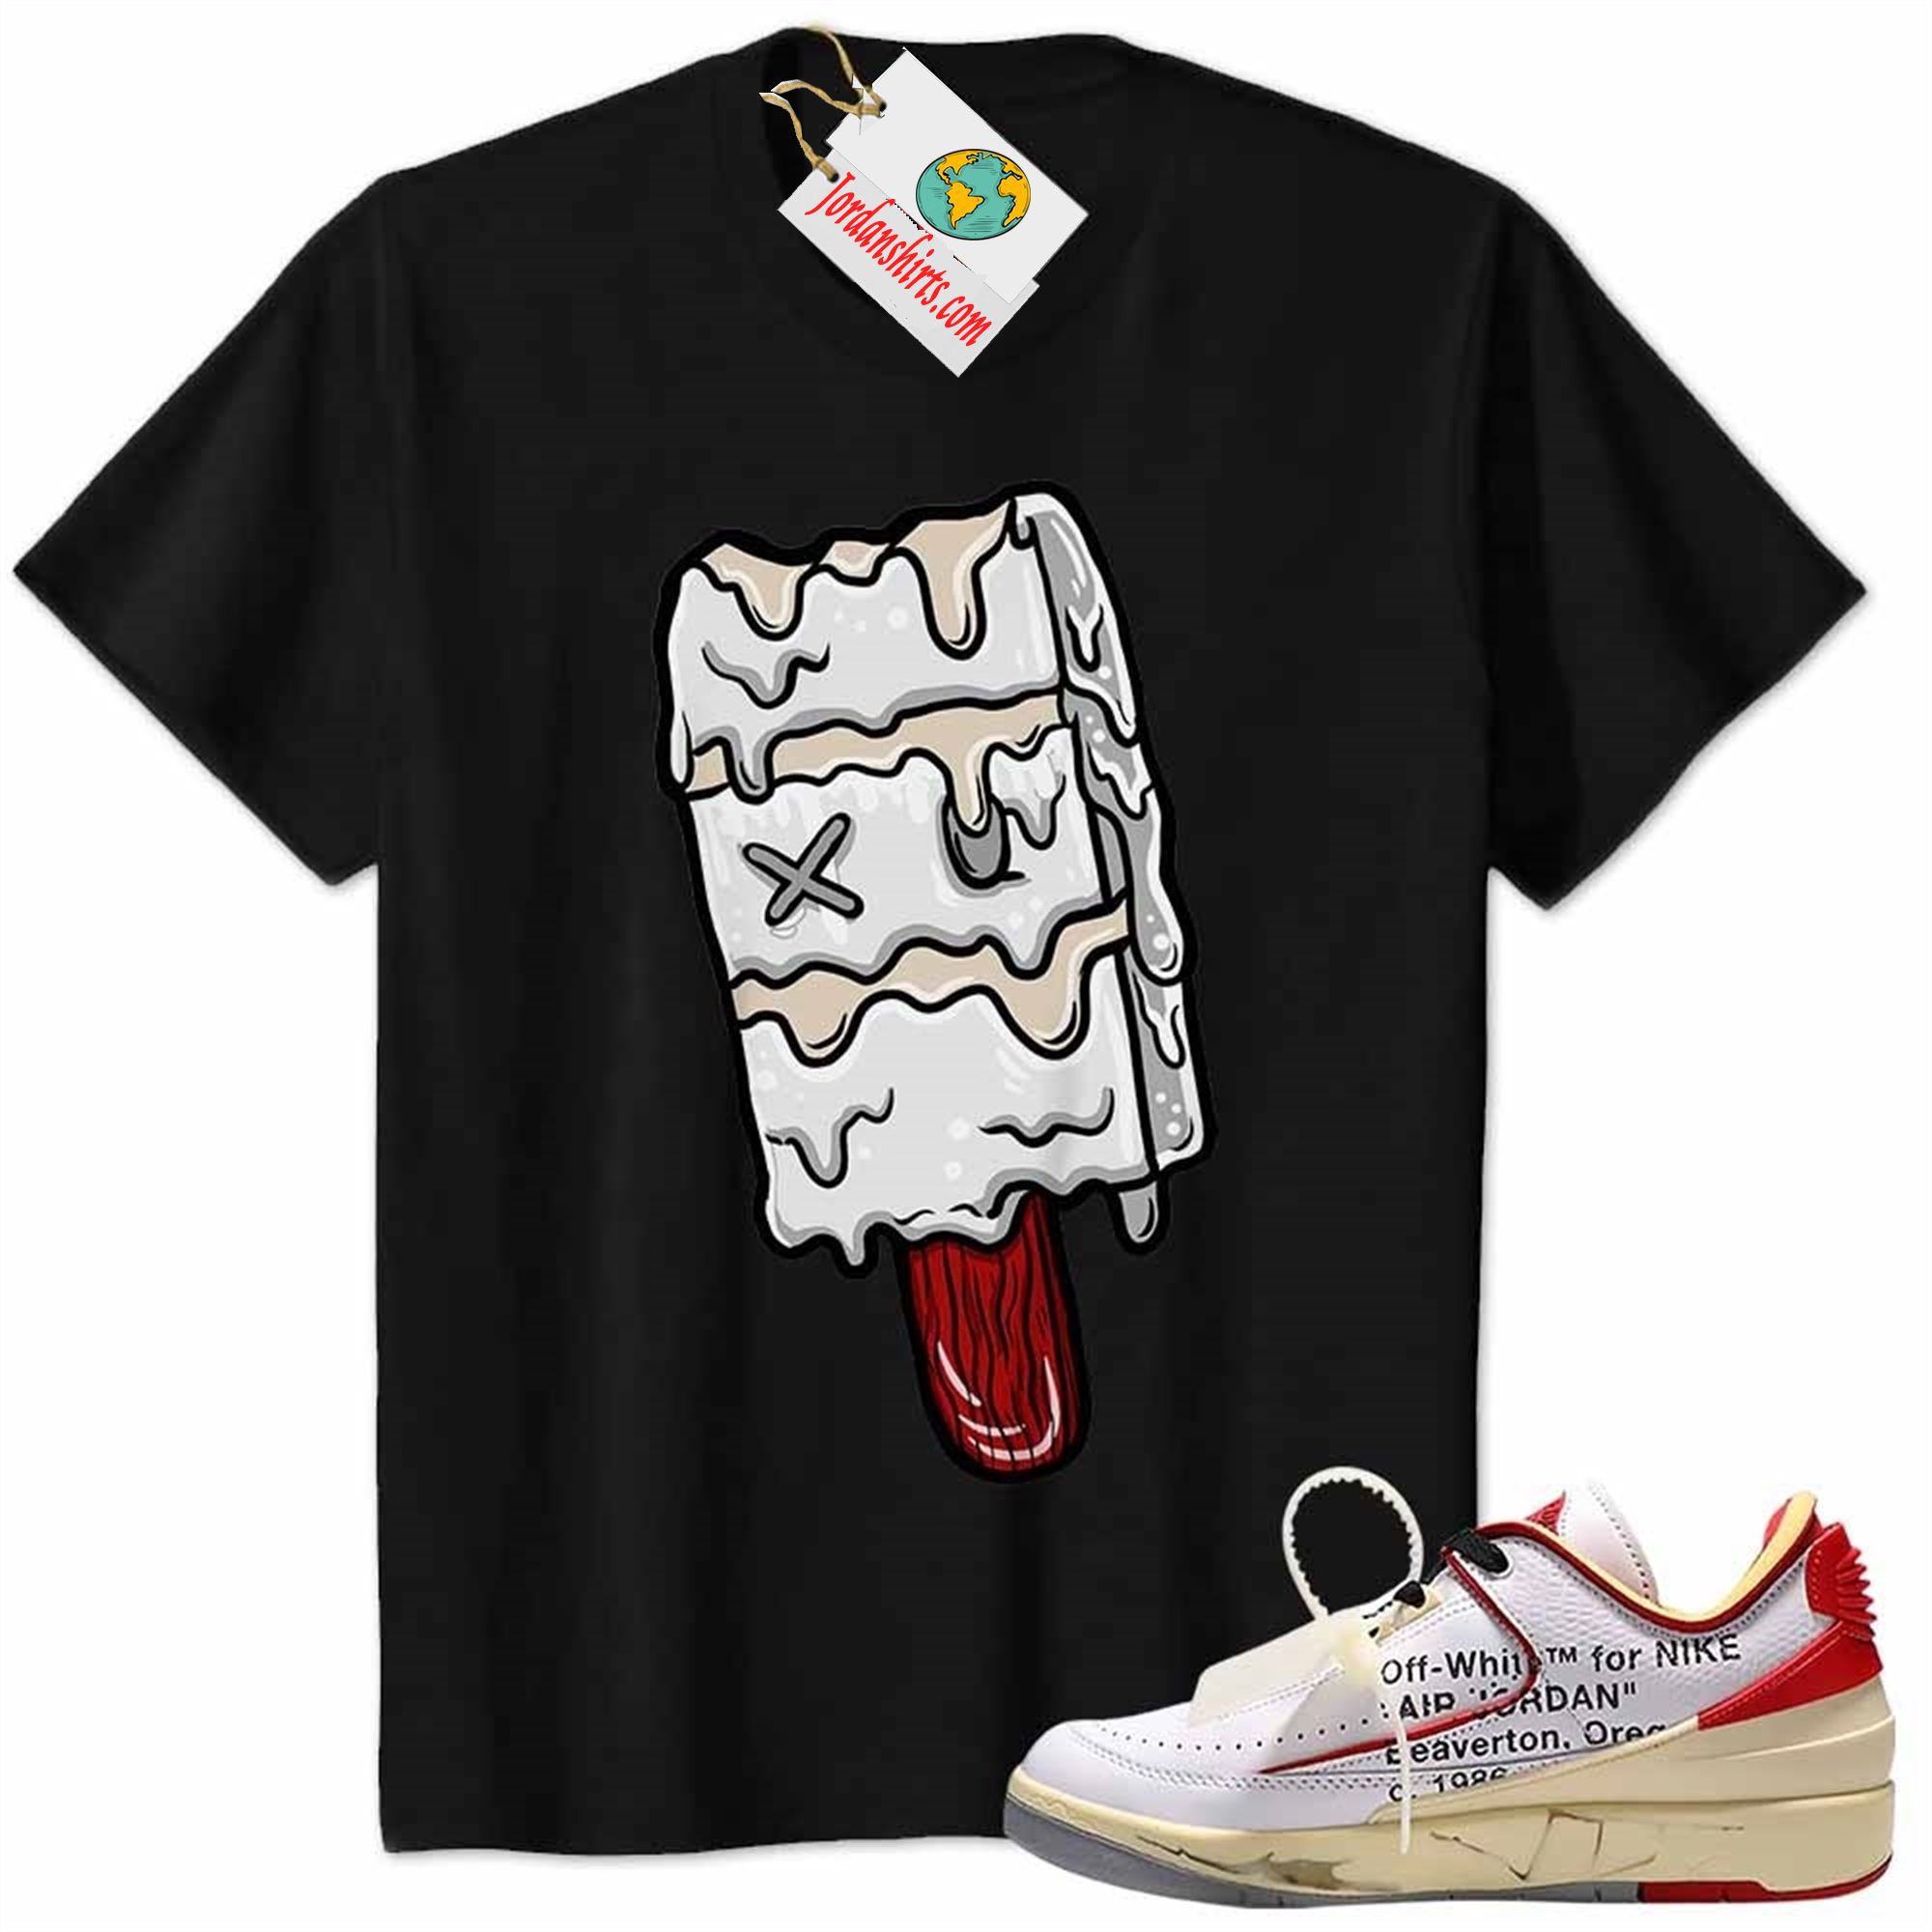 Jordan 2 Shirt, Ice Cream Dripping Black Air Jordan 2 Low White Red Off-white 2s Plus Size Up To 5xl